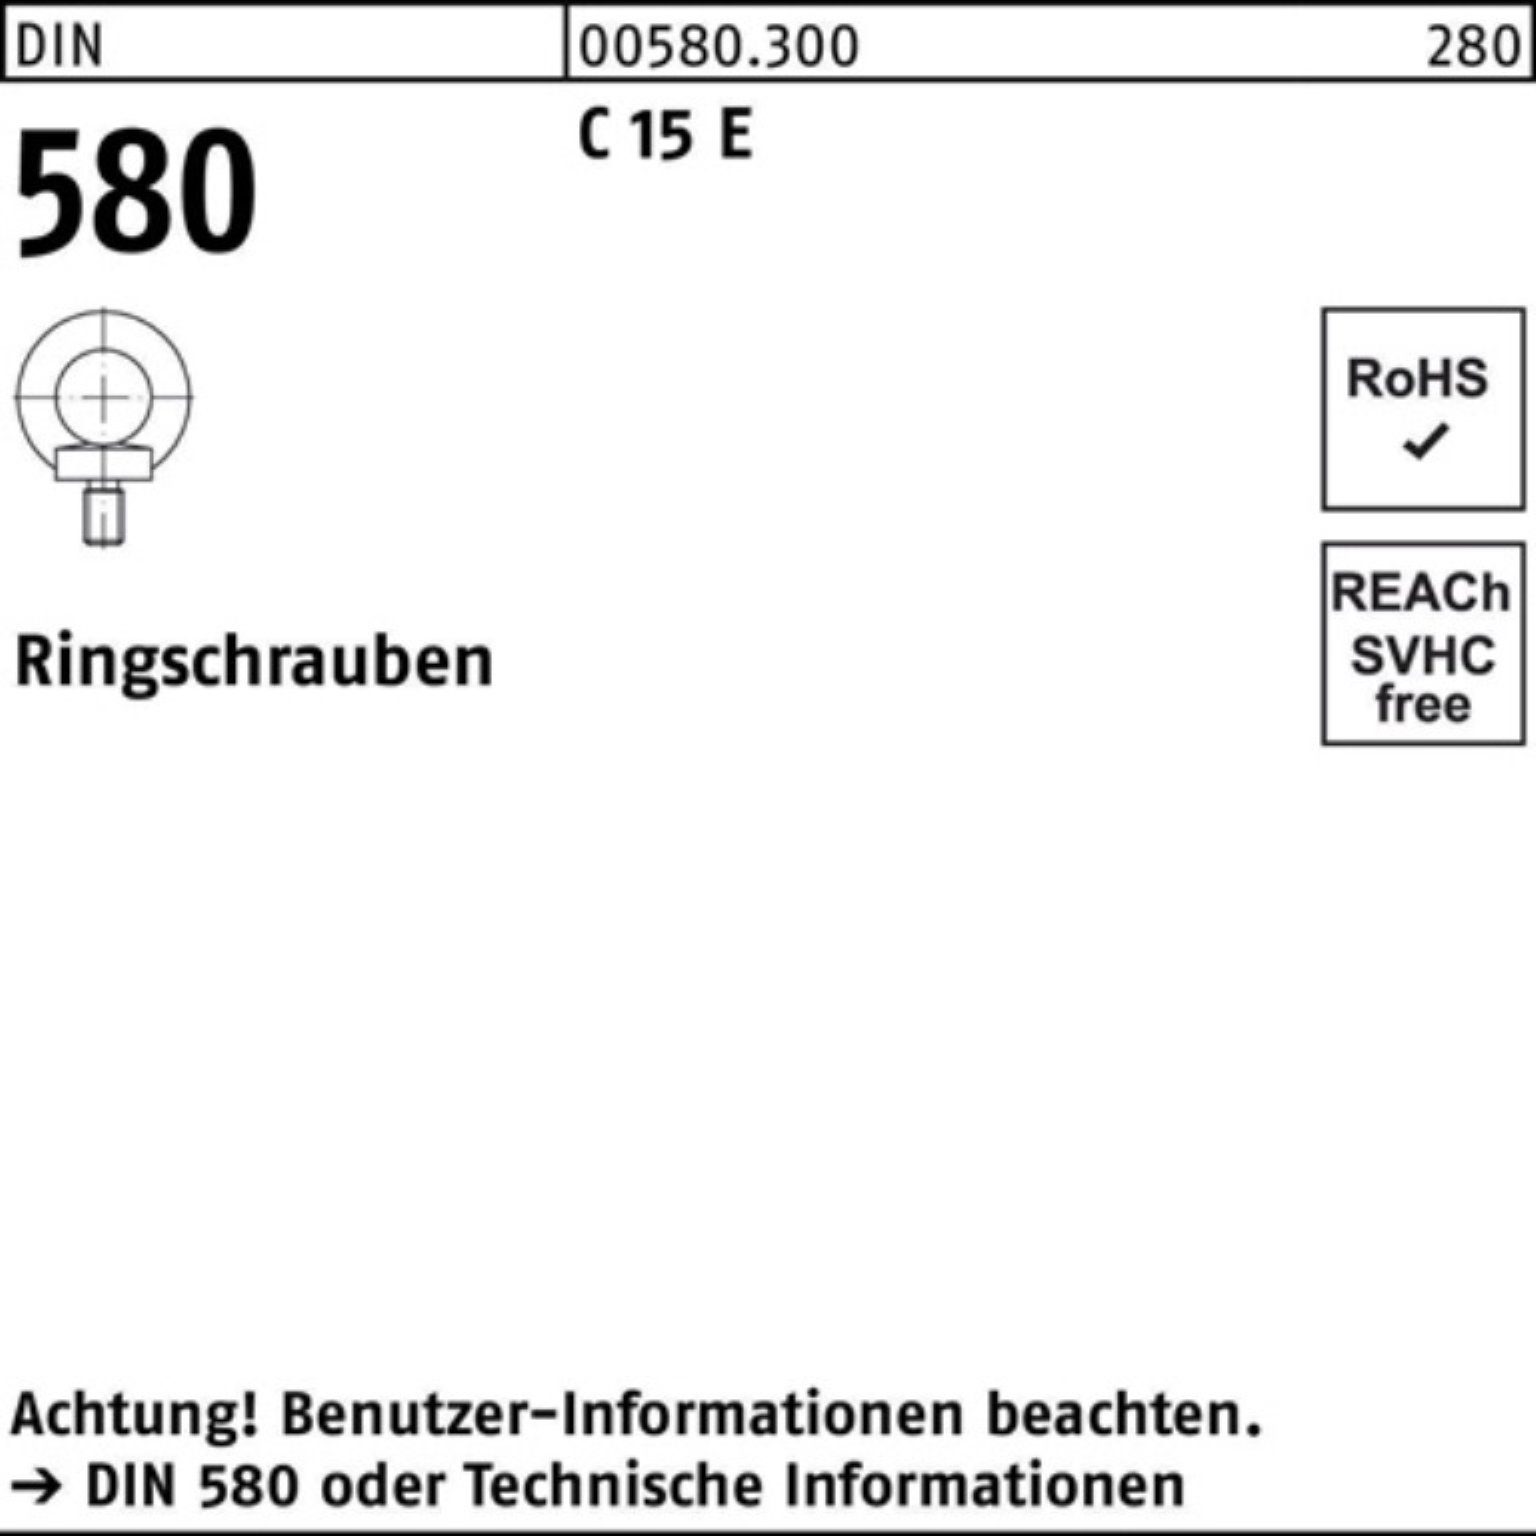 Reyher Schraube 100er Pack Ringschraube DIN 580 M24 C 15 E 1 Stück DIN 580 C 15 E Rin